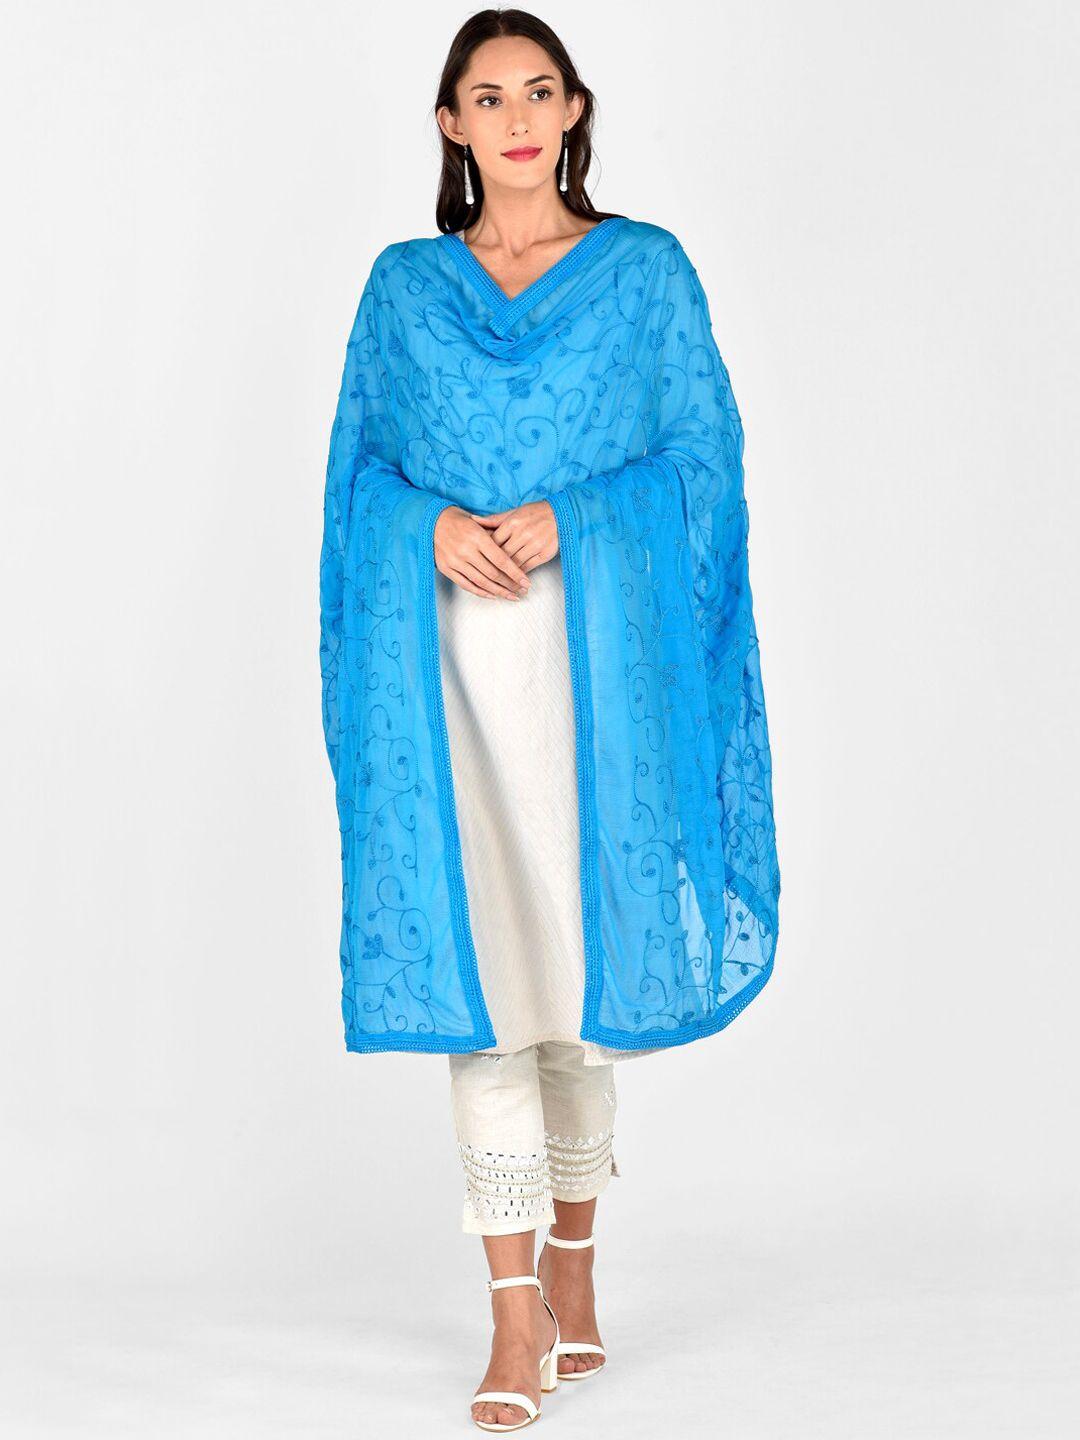 dupatta-bazaar-turquoise-blue-embroidered-dupatta